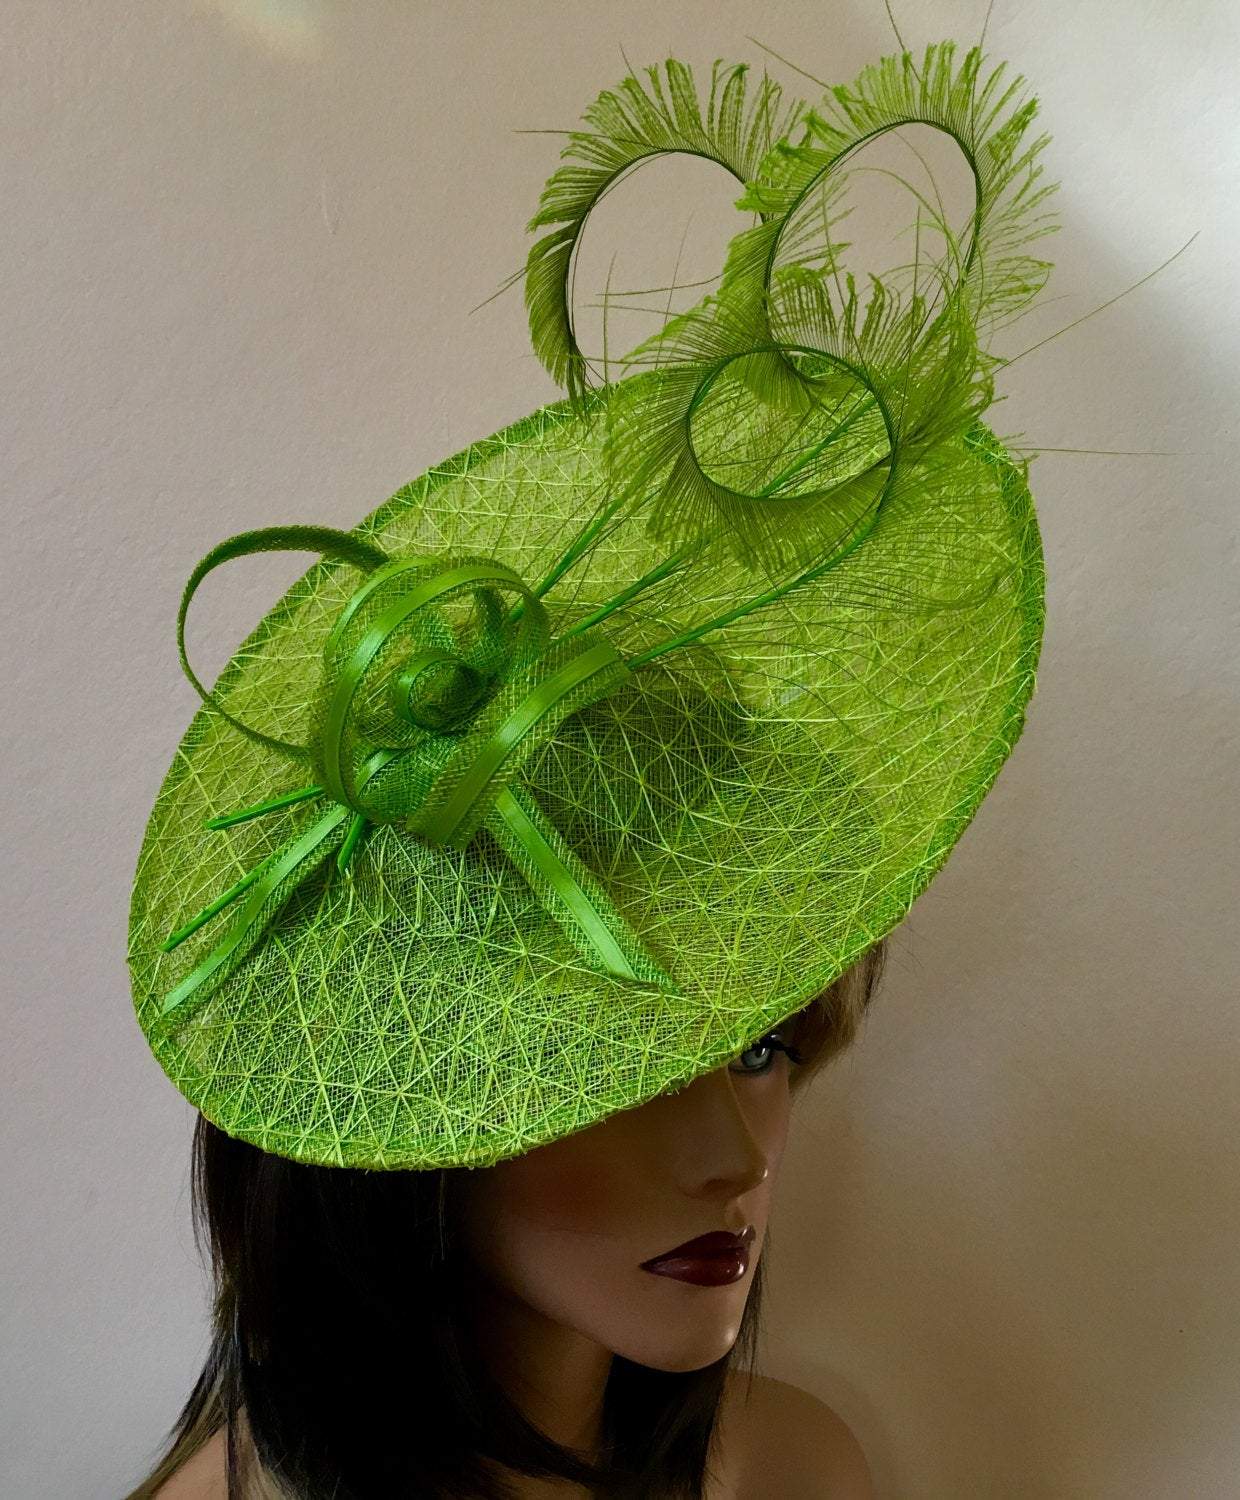 Kentucky Derby hat. Royal Ascot green fascinator. Fascinator for church, wedding, races